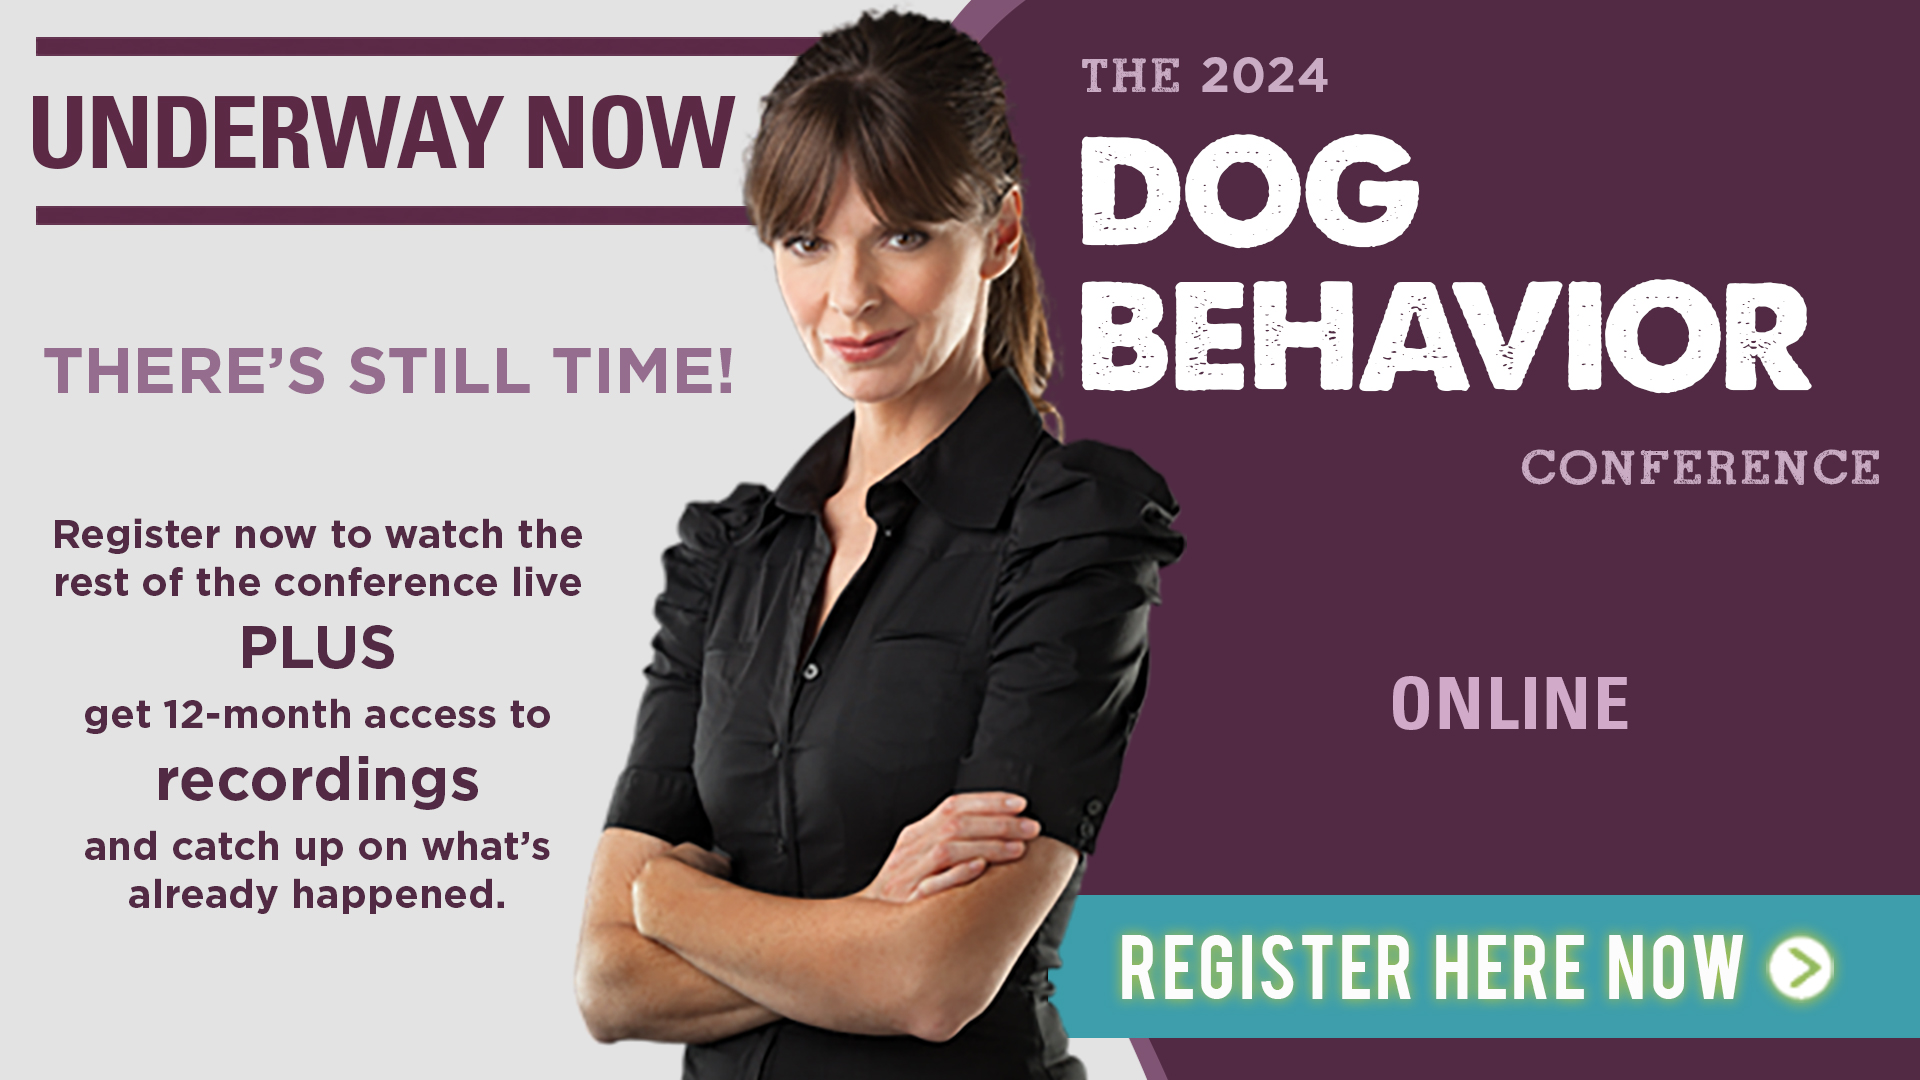 The 2024 Dog Behavior Conference